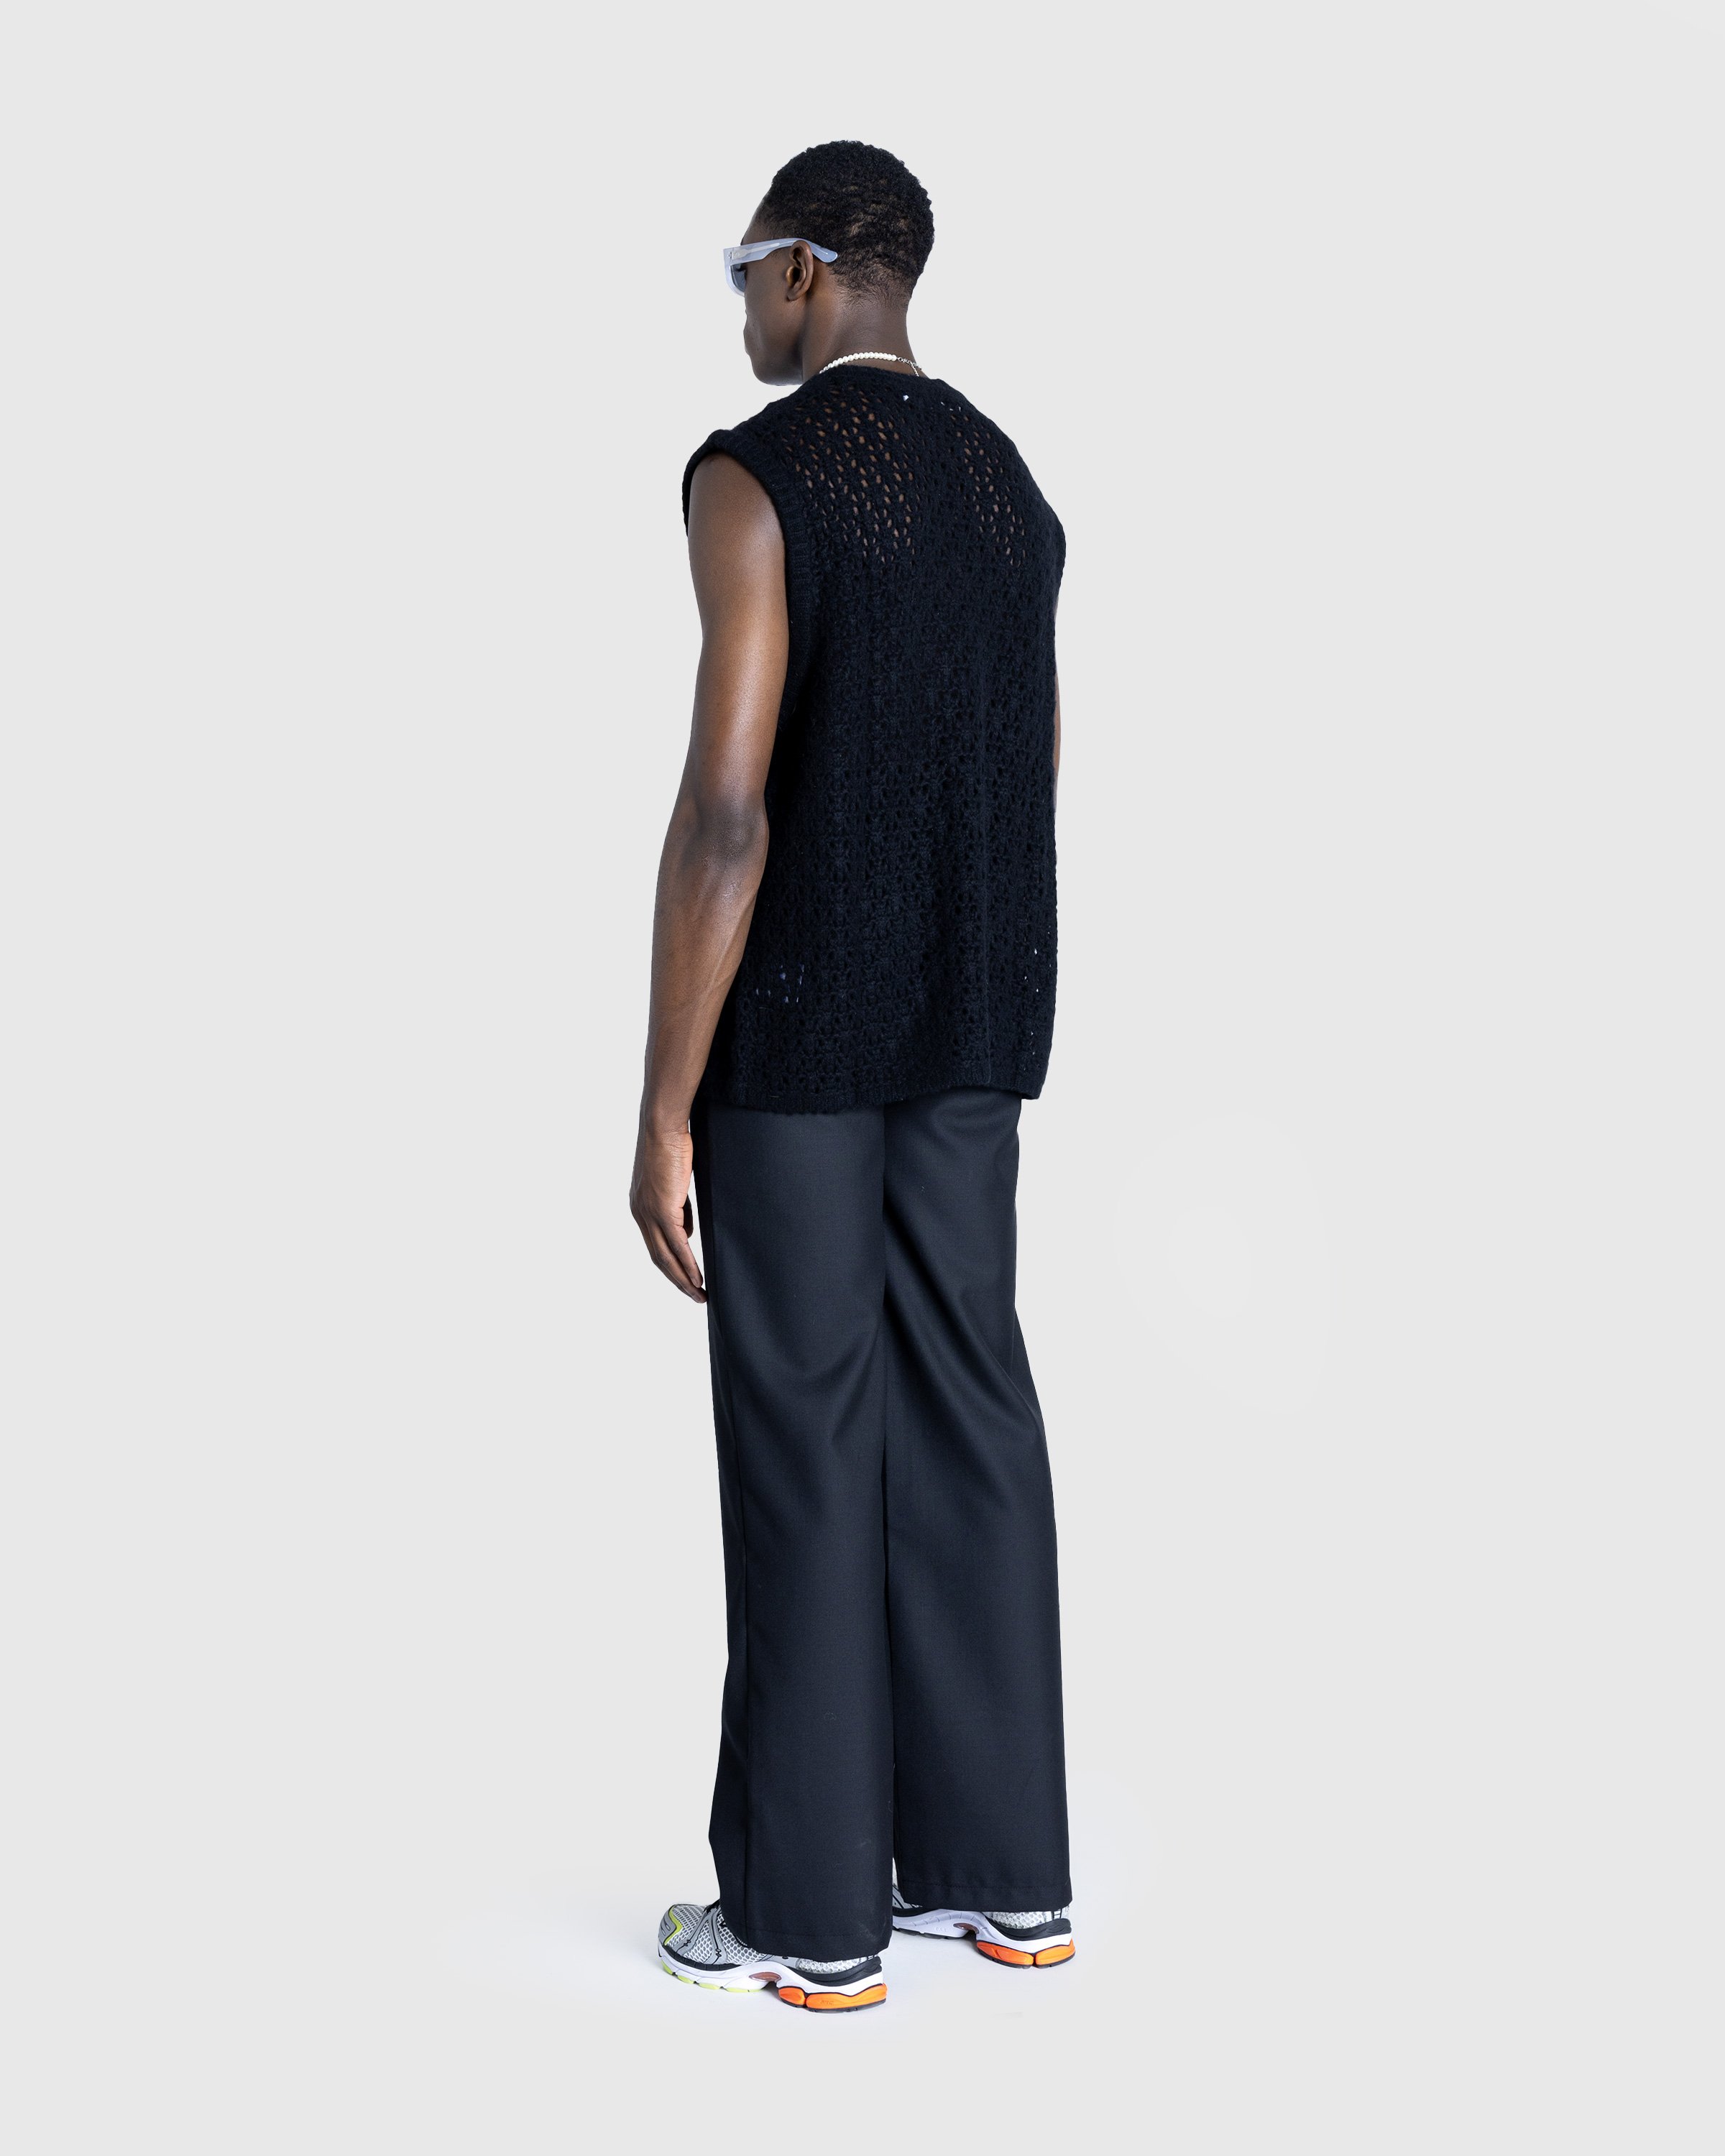 Séfr - JIRO TROUSER BLACK WOOL - Clothing - Black - Image 4